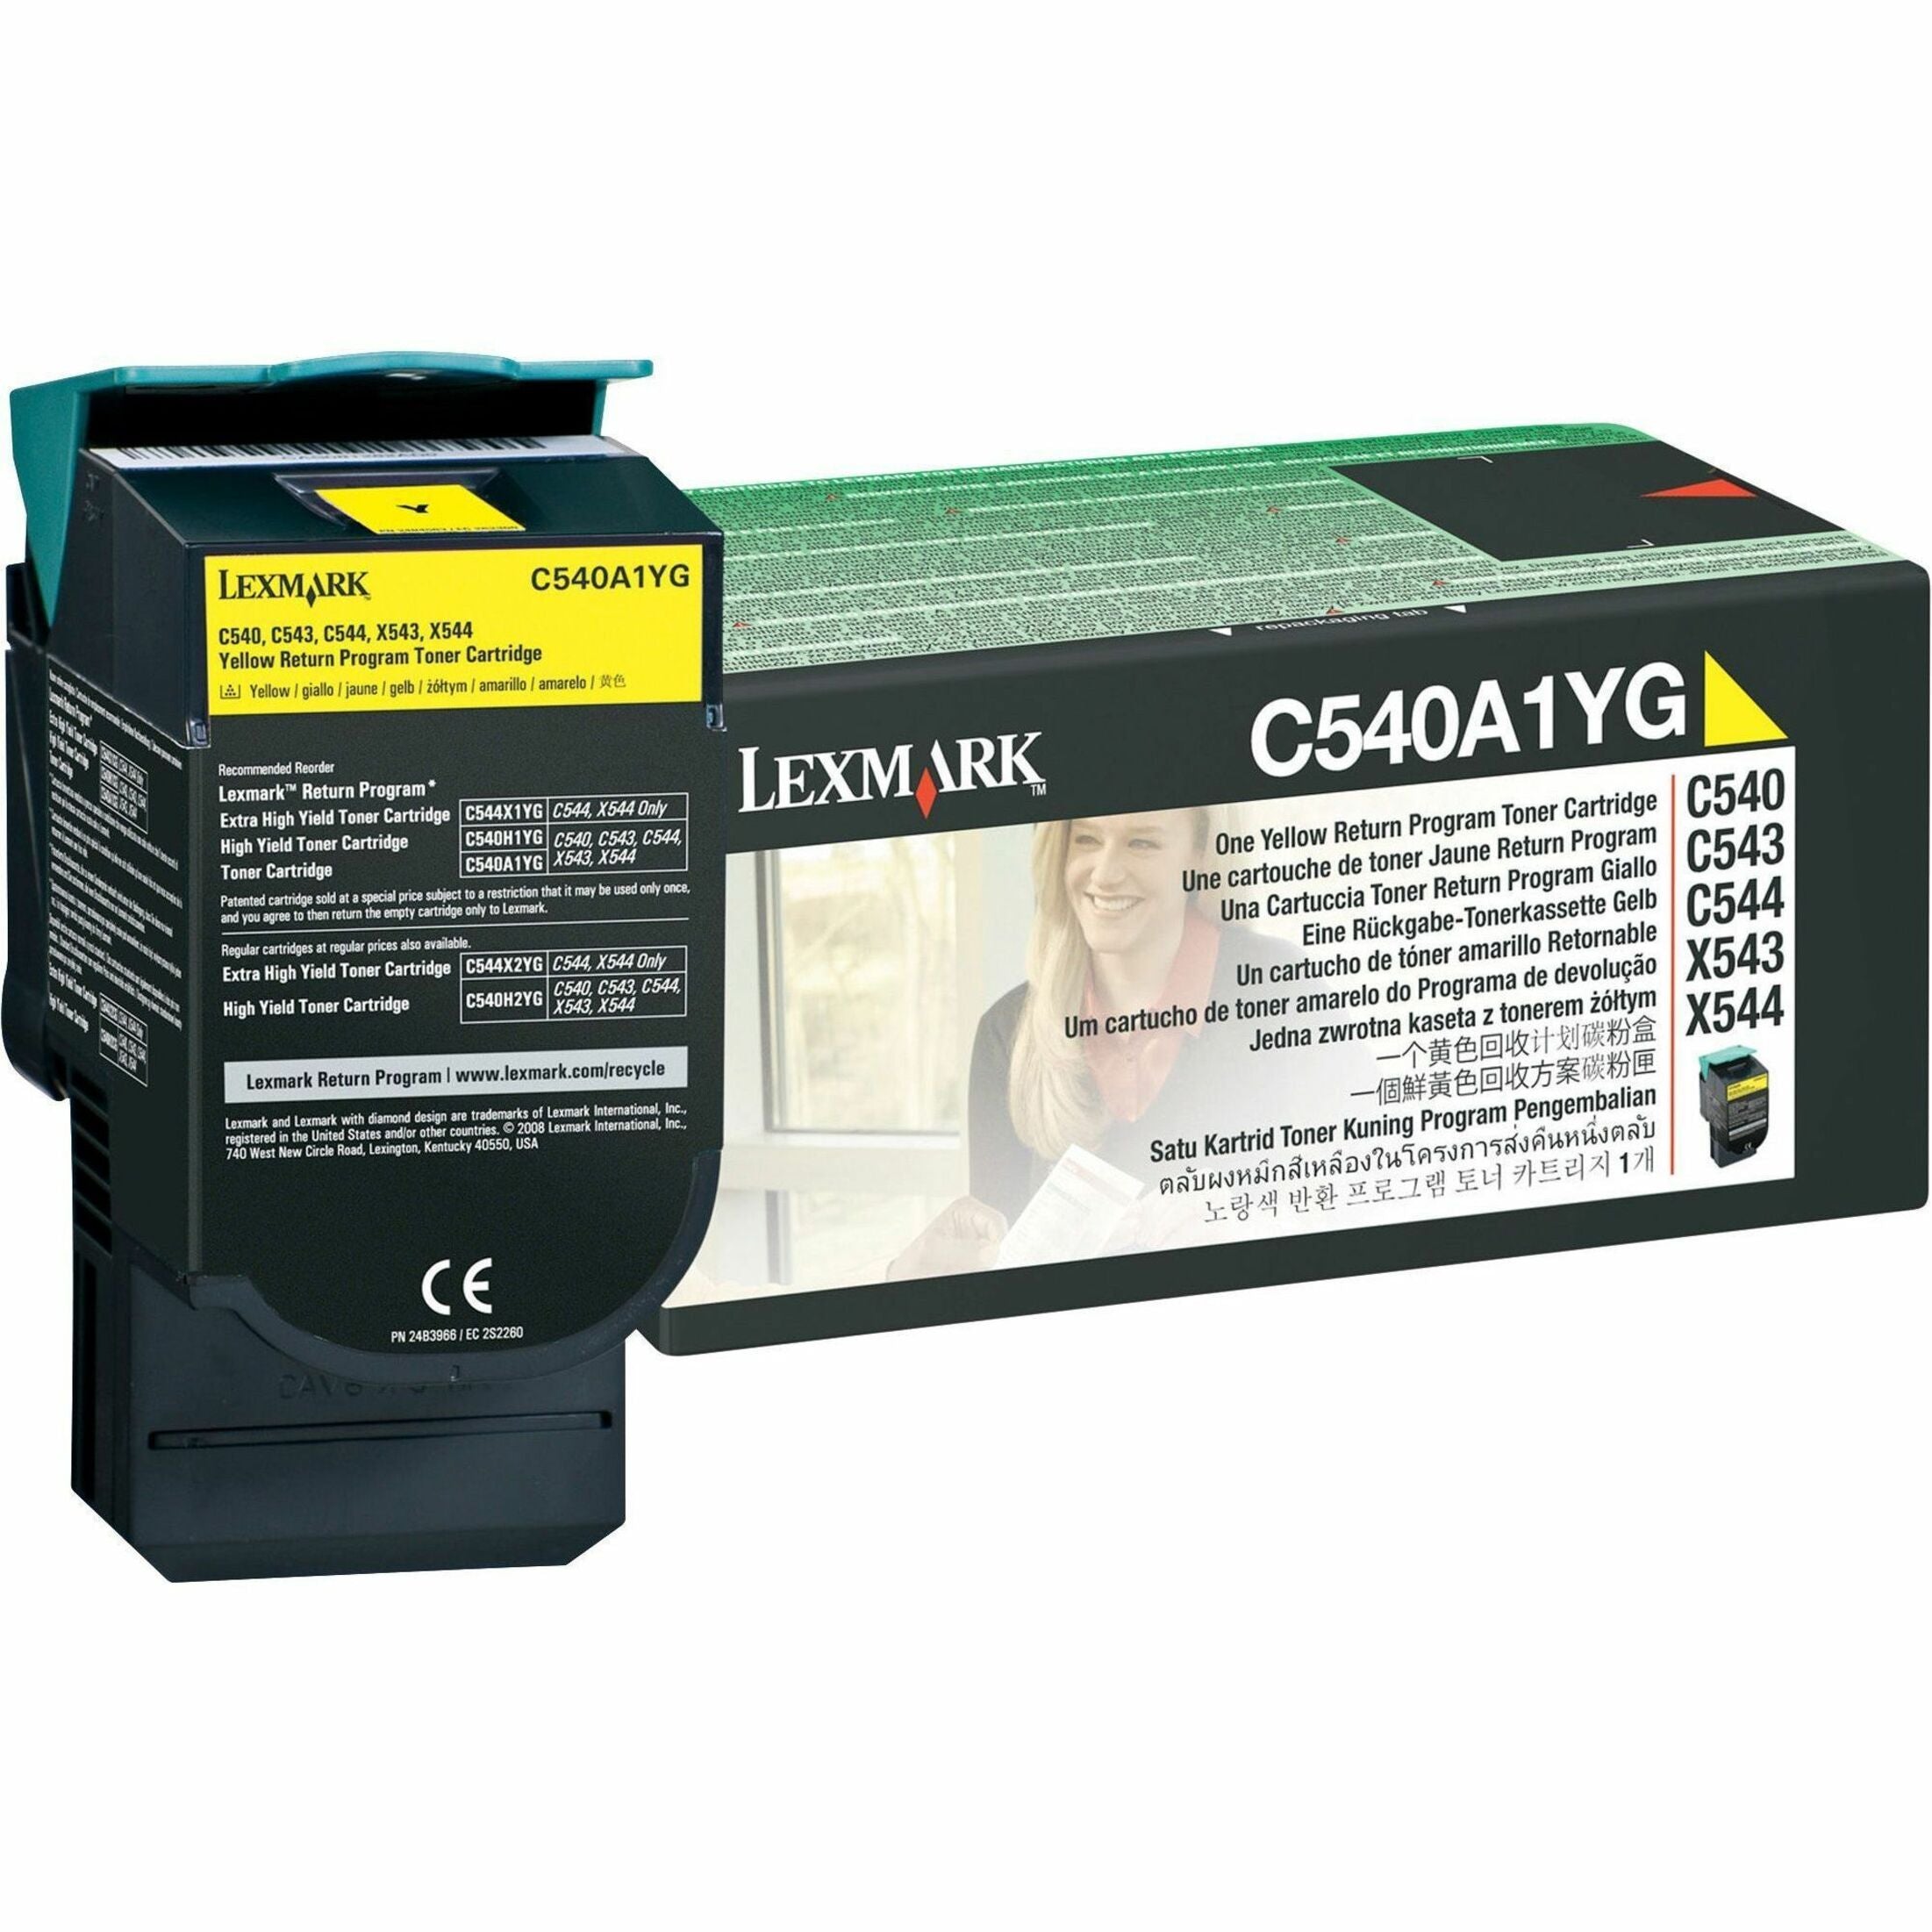 Lexmark C540A1YG Print Cartridge, Yellow, 1000 Page Yield